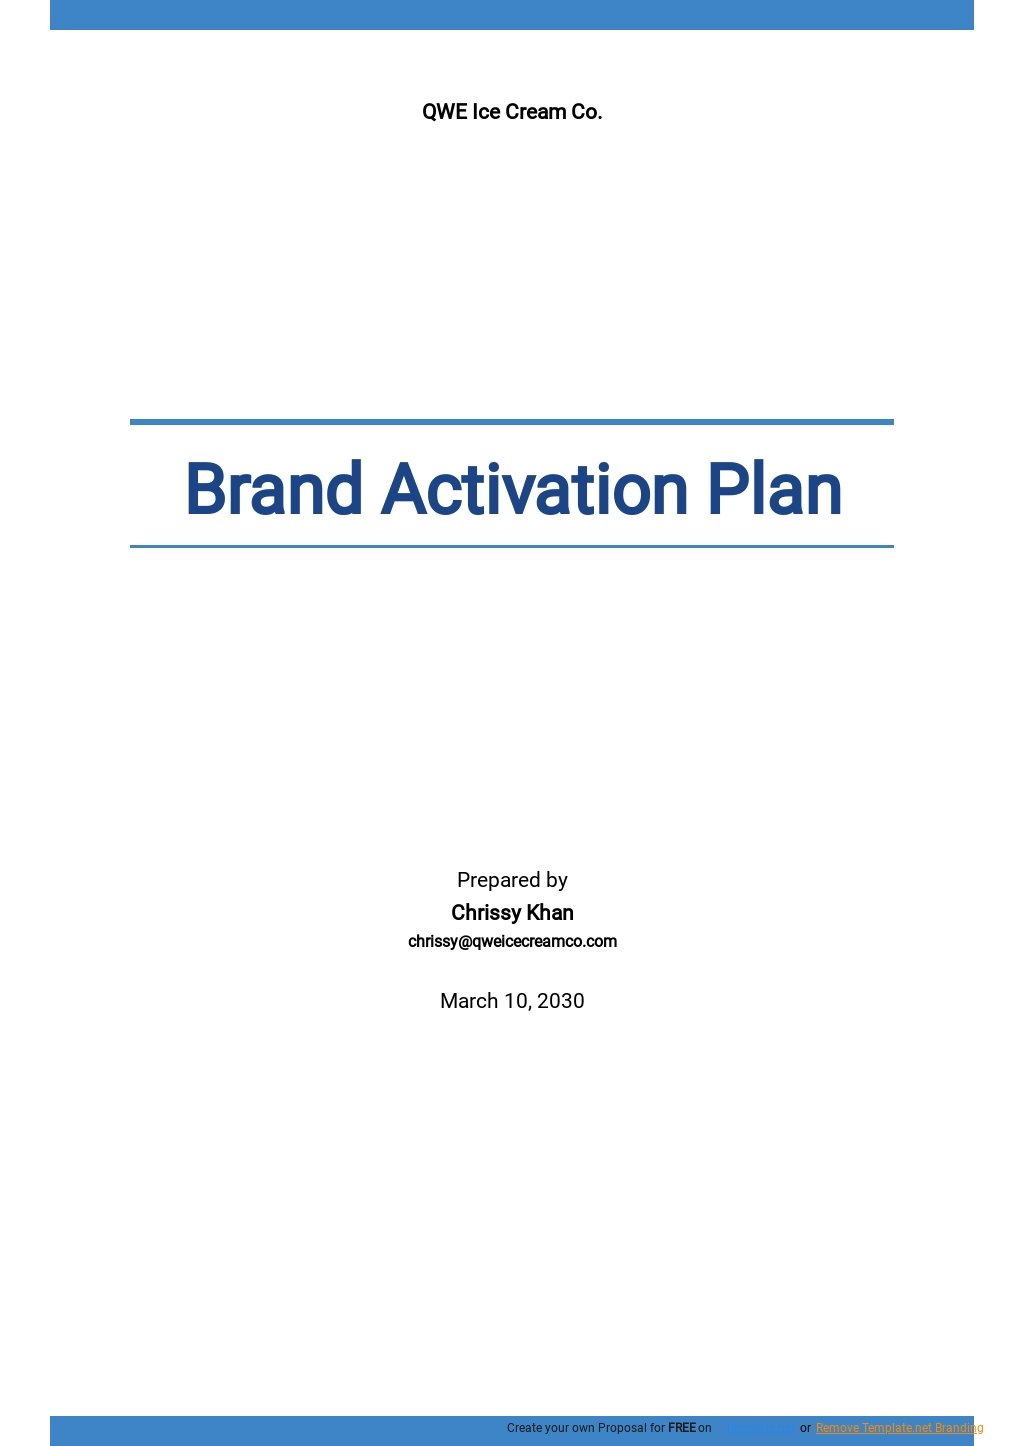 Brand Activation Plan Template.jpe